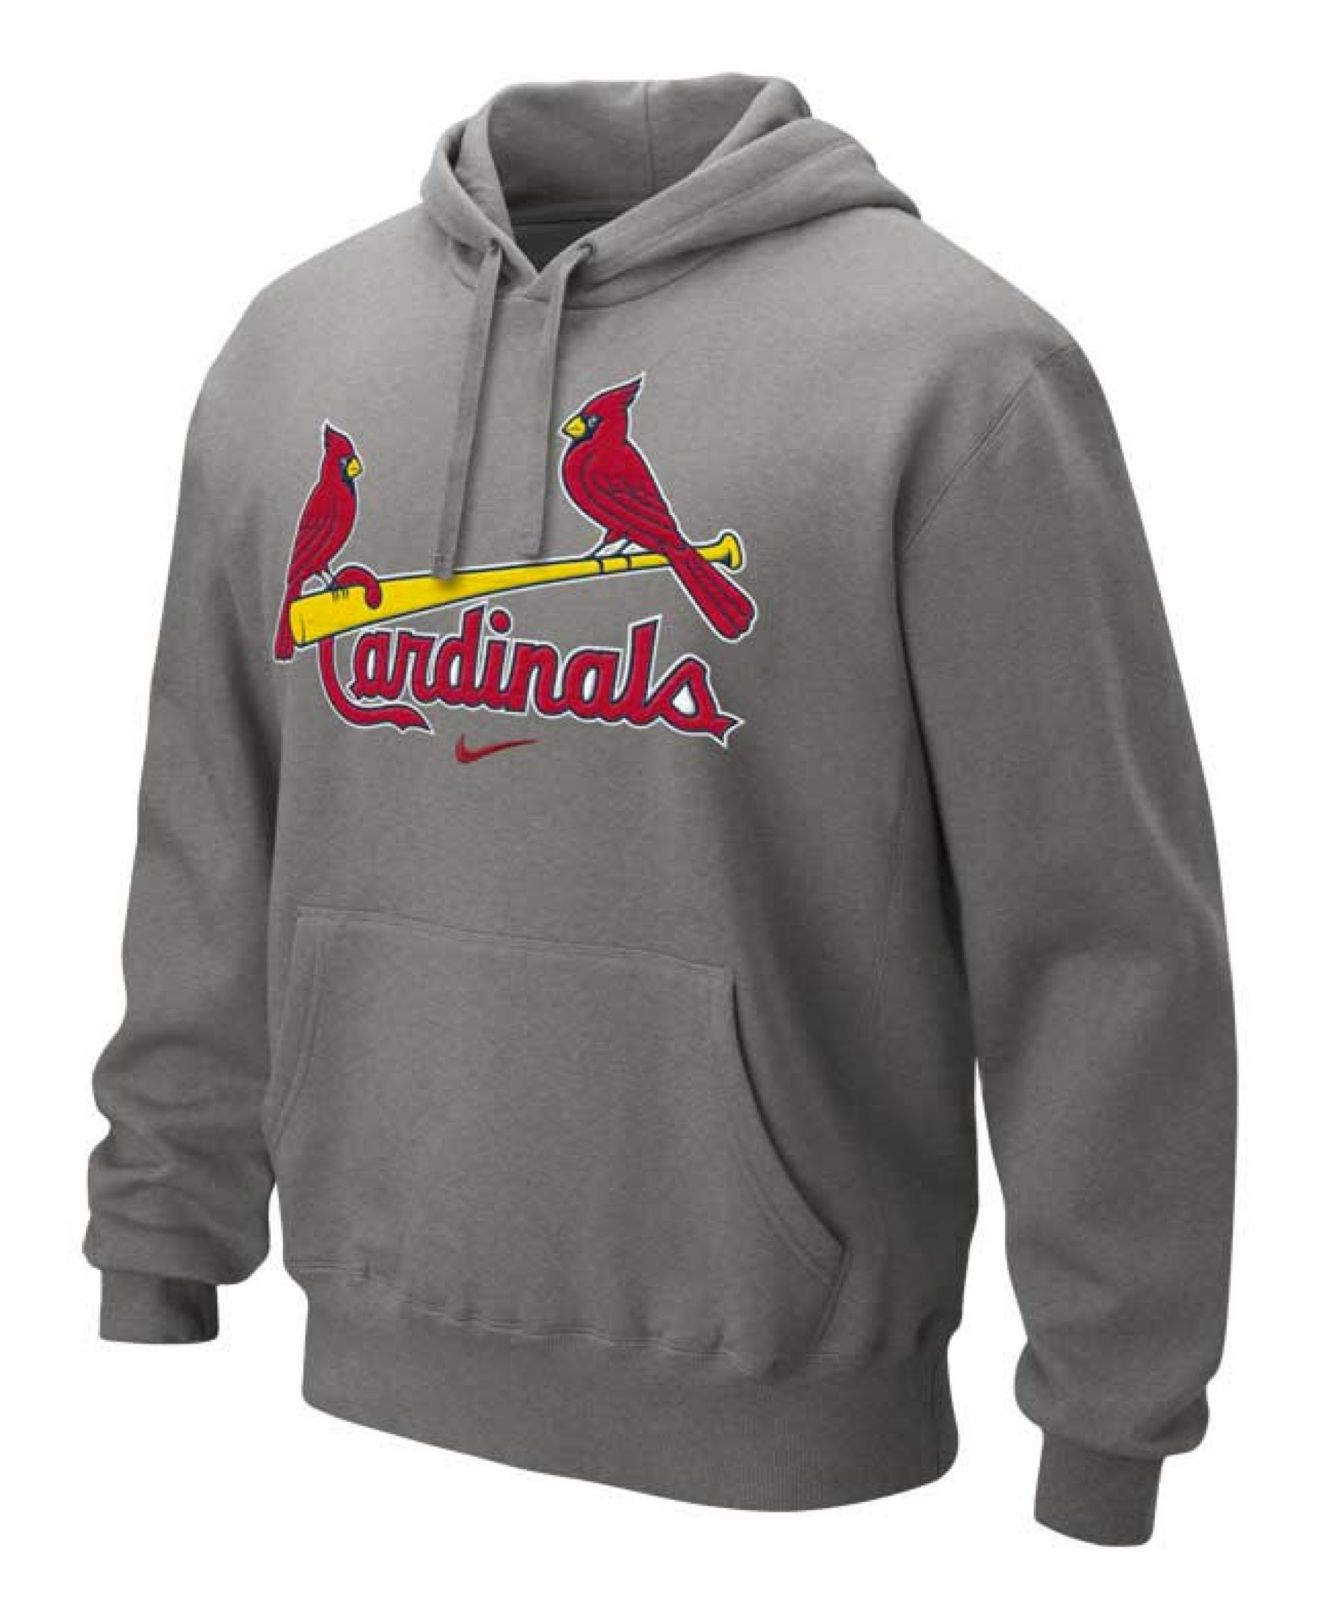 Men's Pro Standard Navy St. Louis Cardinals Team Logo Pullover Hoodie